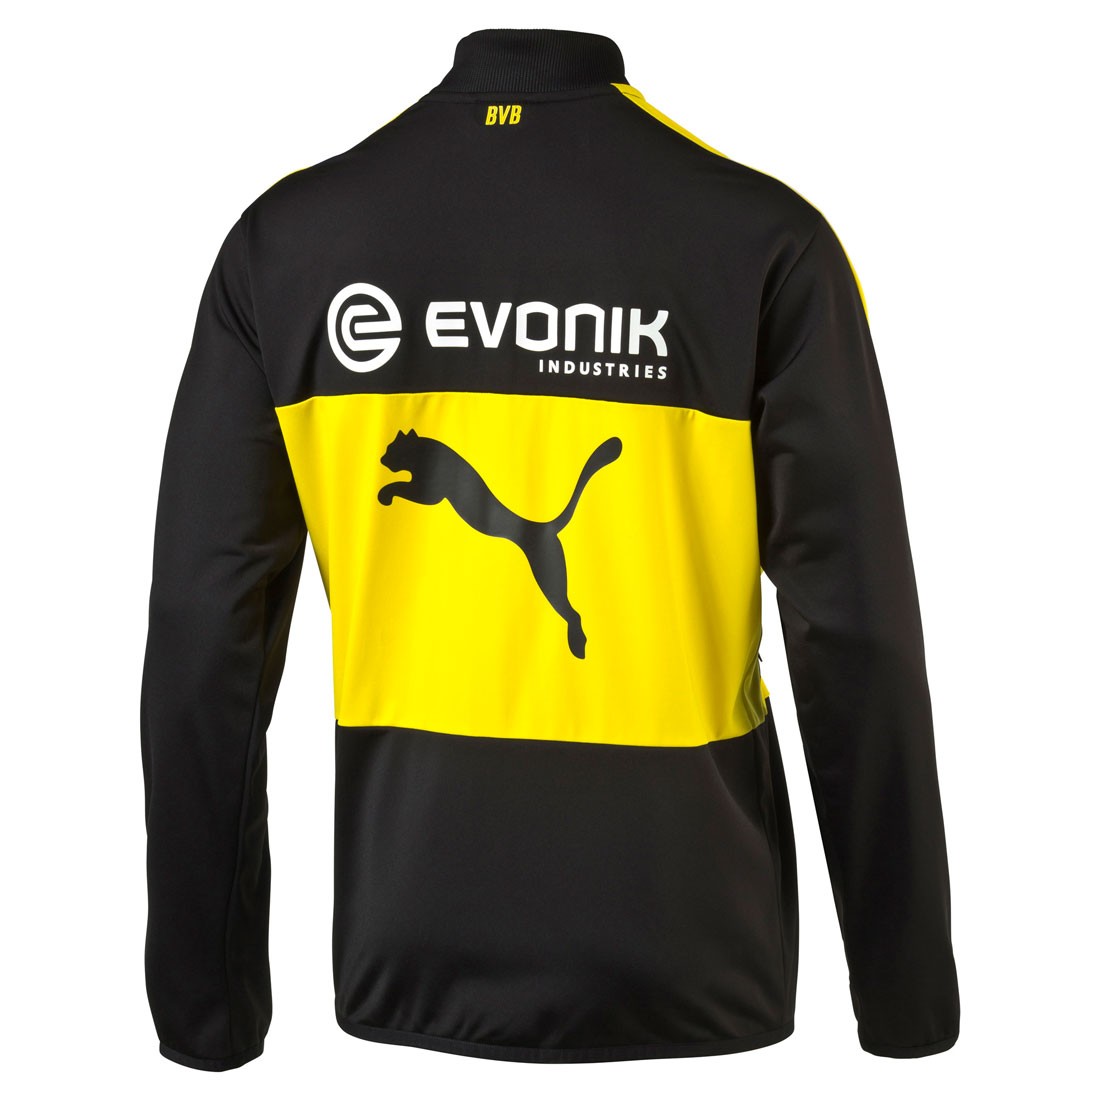 Puma BVB Poly Jacket with Sponsor Herren Trainingsjacke 749873 01 Borussia Dortmund 09